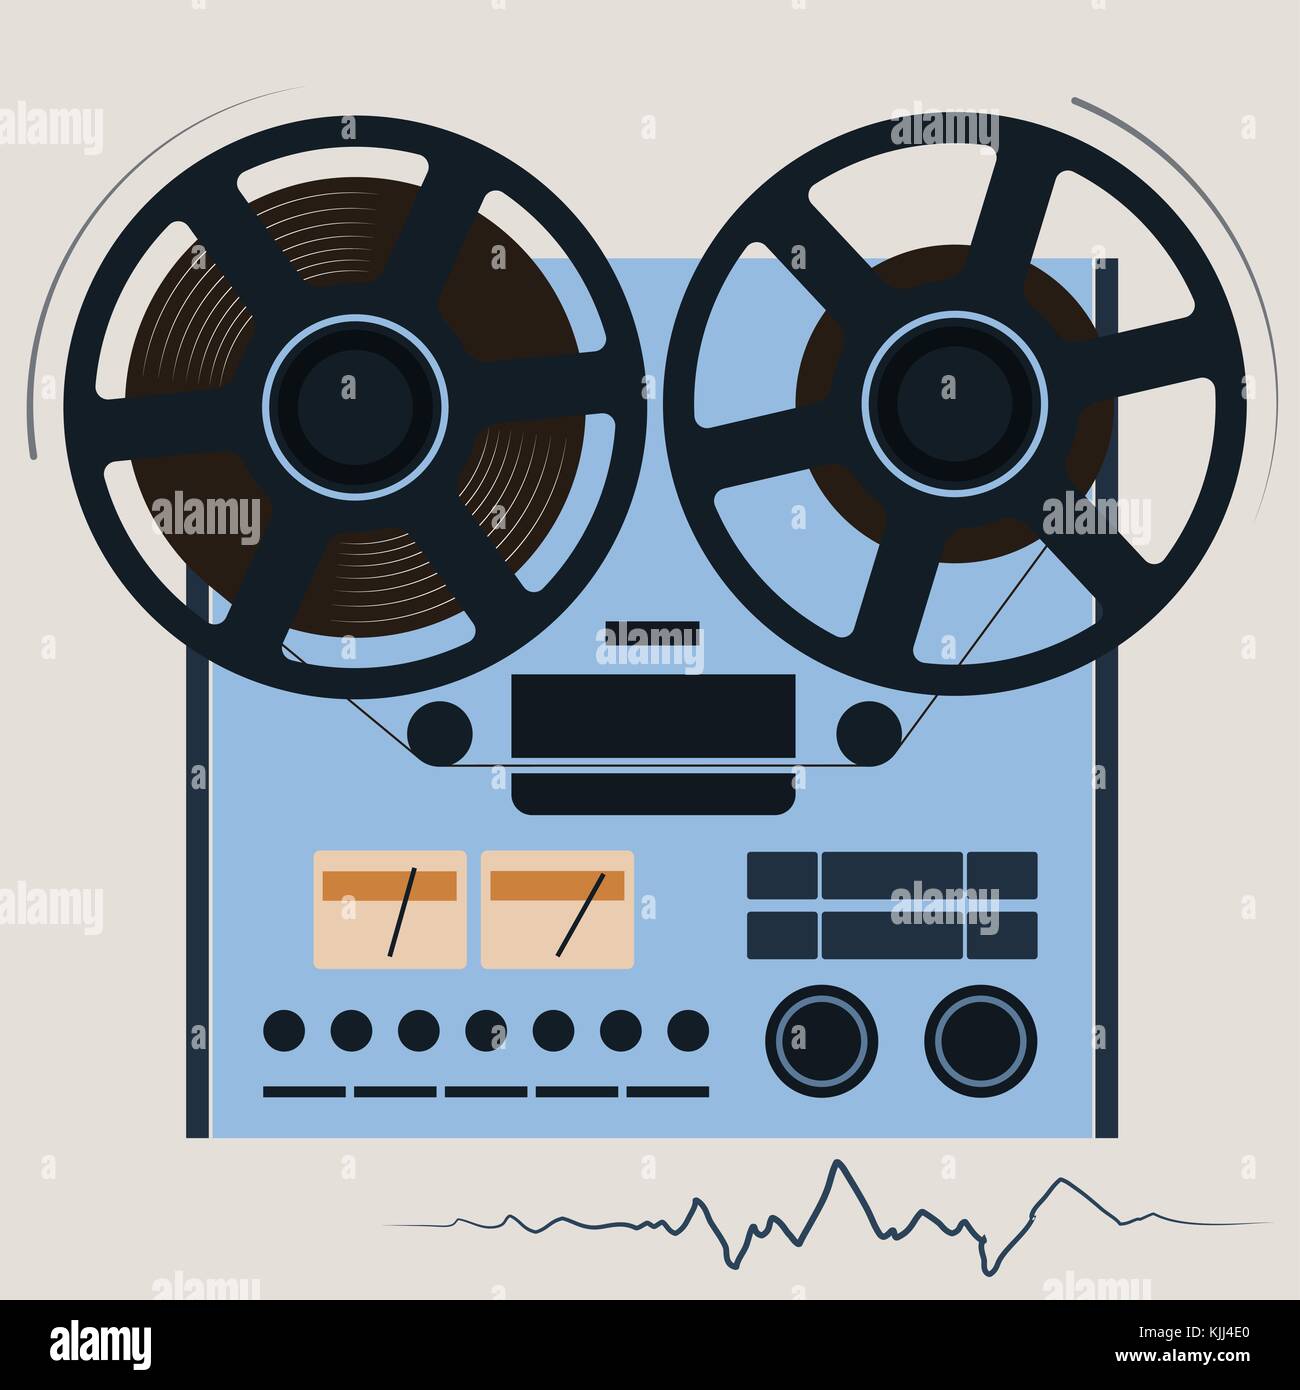 Tape Recorder, Deck or Machine in Retro Style with Bobbins. Sound Retro Audio  Device. Stock Vector - Illustration of audio, cassette: 190786119, sound  recording tape